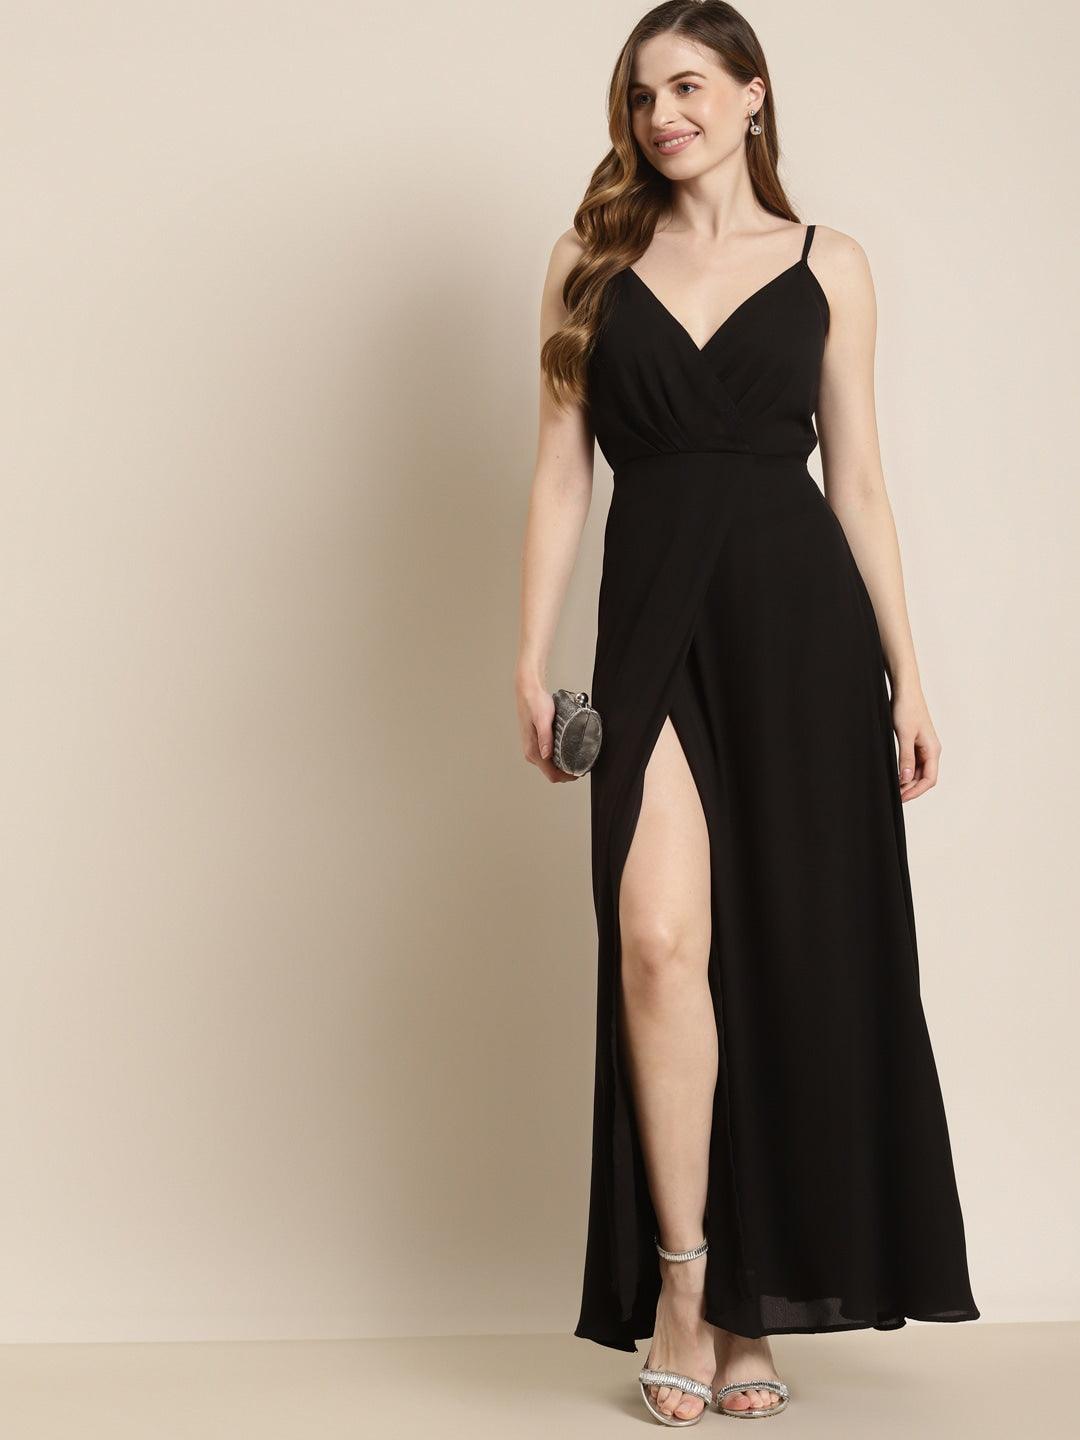 Qurvii Black Solid Crepe Maxi Dress - Qurvii India